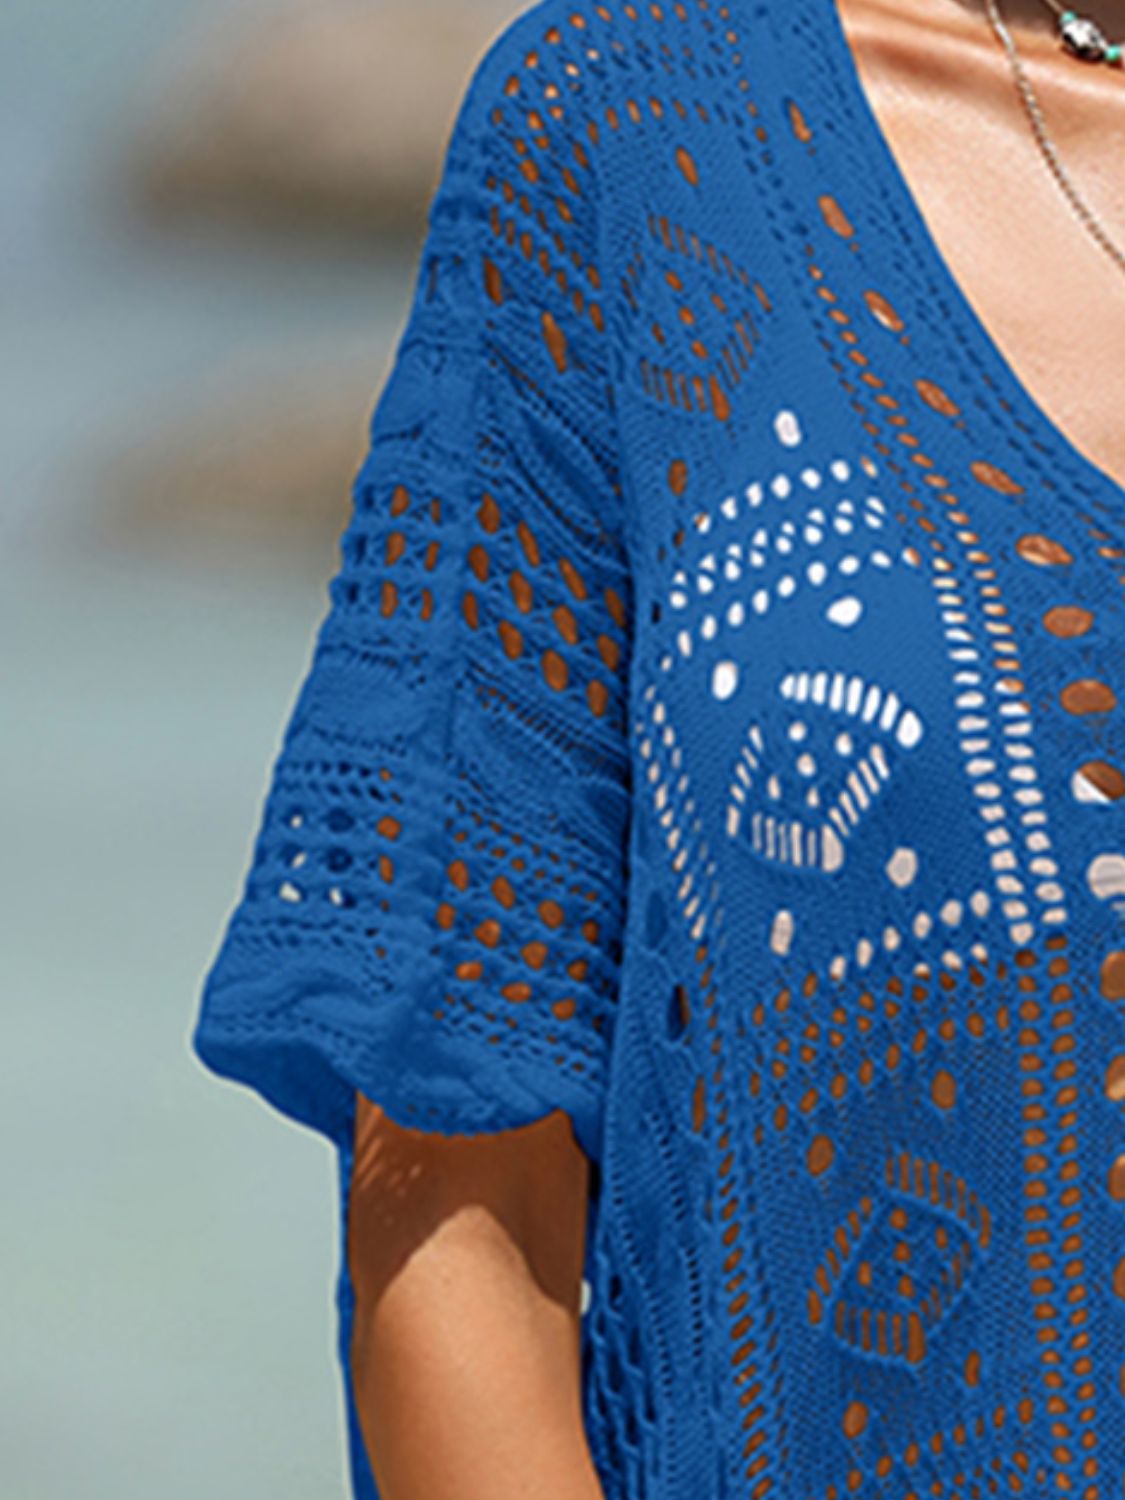 TEEK - Knit Mesh Half Sleeve Cover-Up DRESS TEEK Trend Royal Blue One Size 